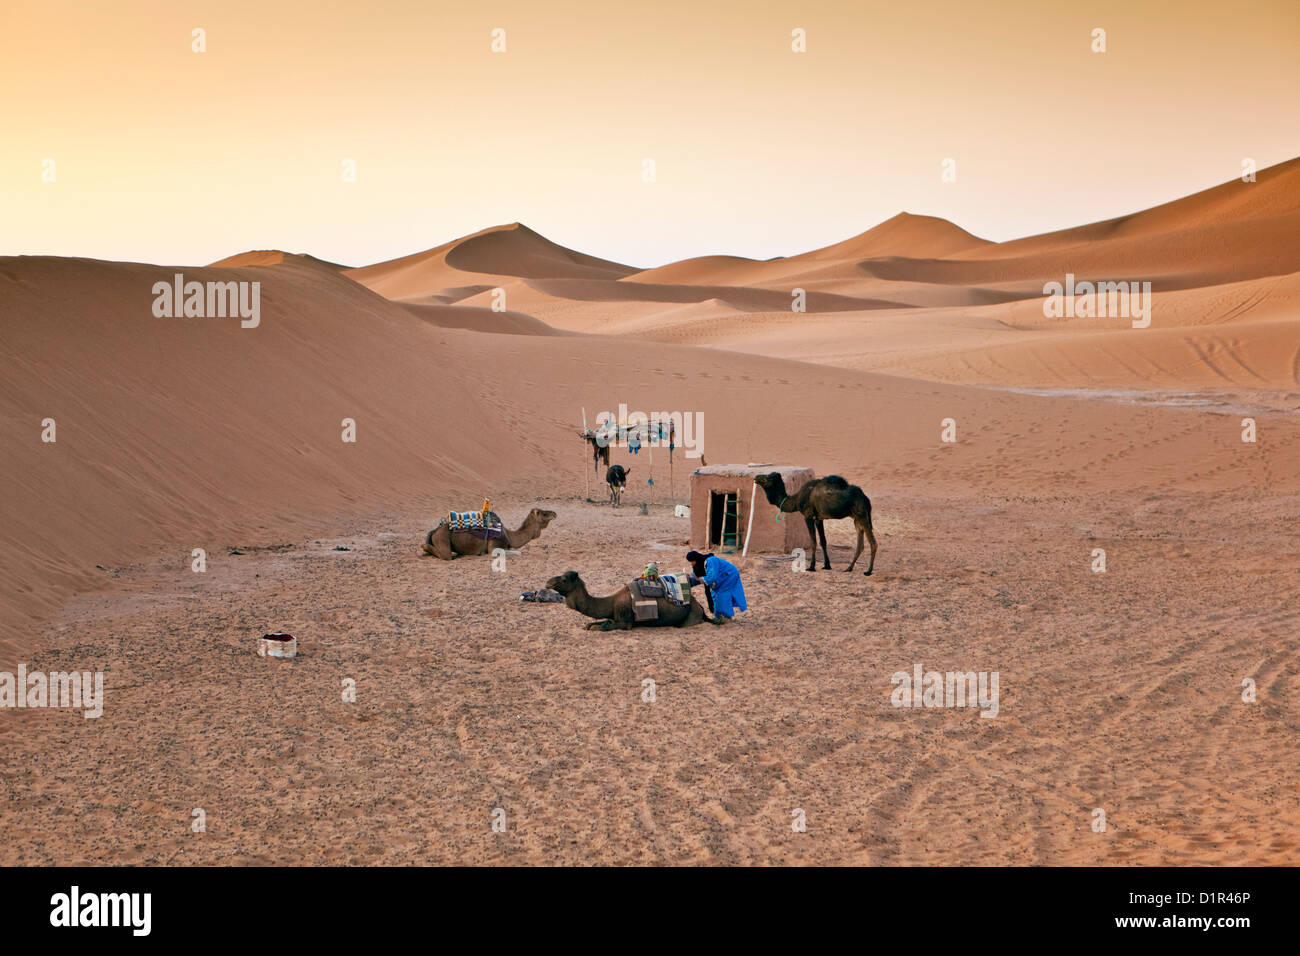 Le Maroc, M'Hamid, Erg Chigaga dunes de sable. Désert du Sahara. Bivouac de camel-pilote. Banque D'Images